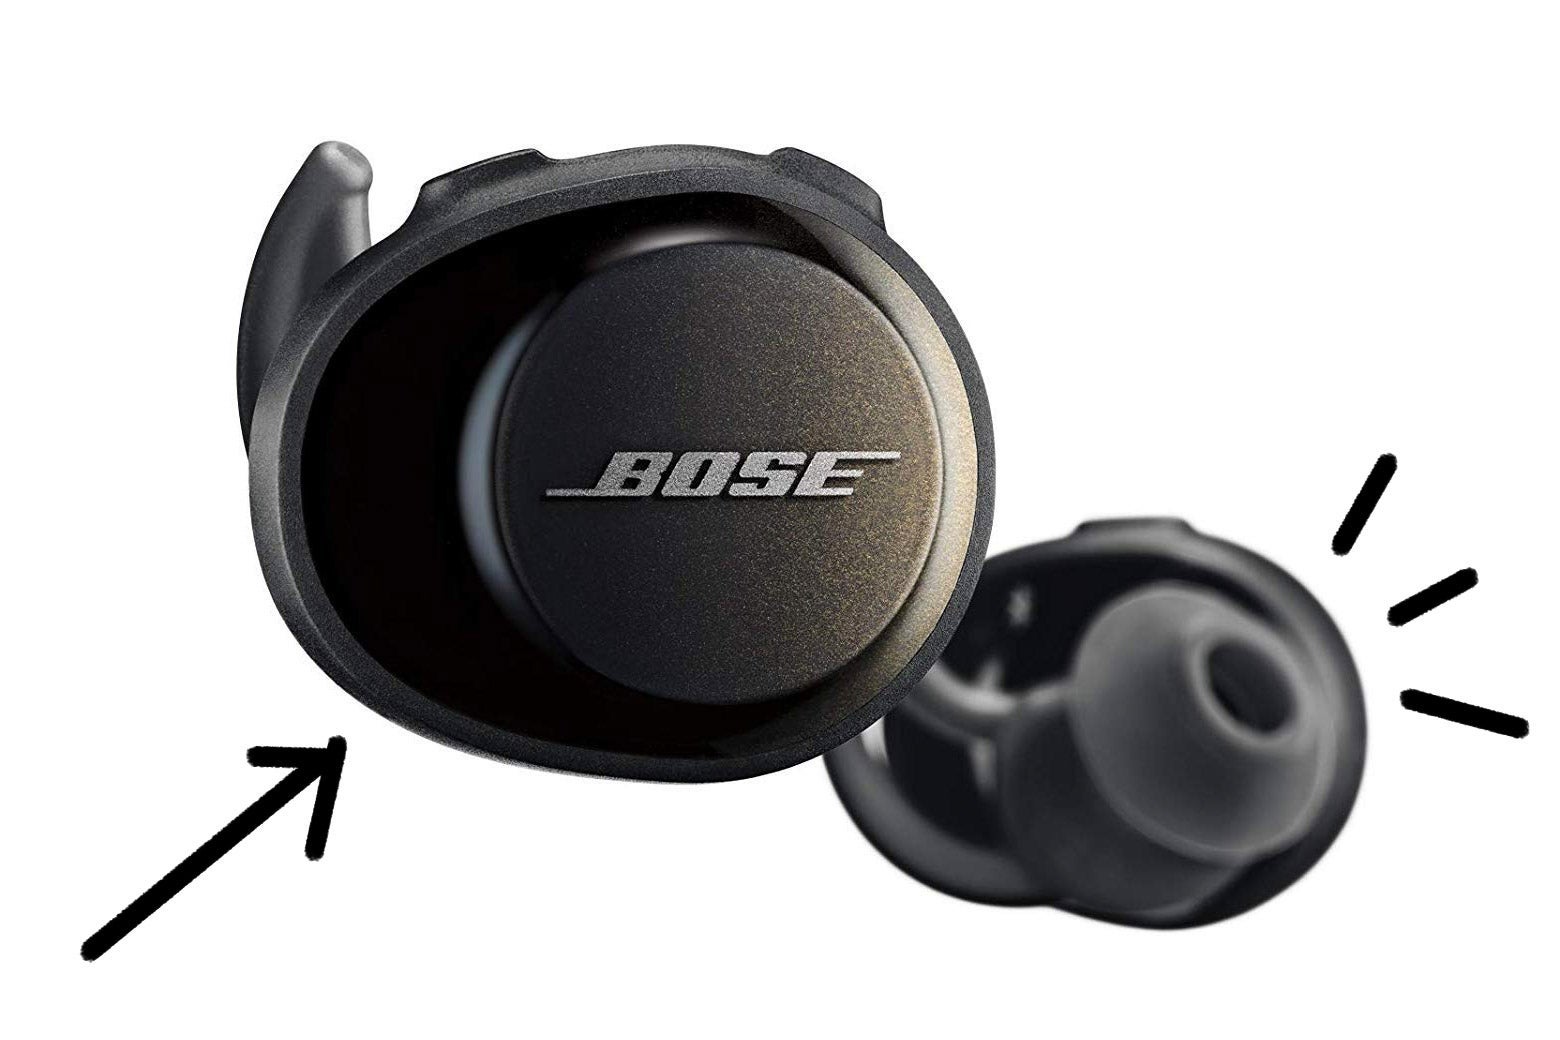 Bose wireless headphones sale: Get Friday prices on SoundSport Free model.